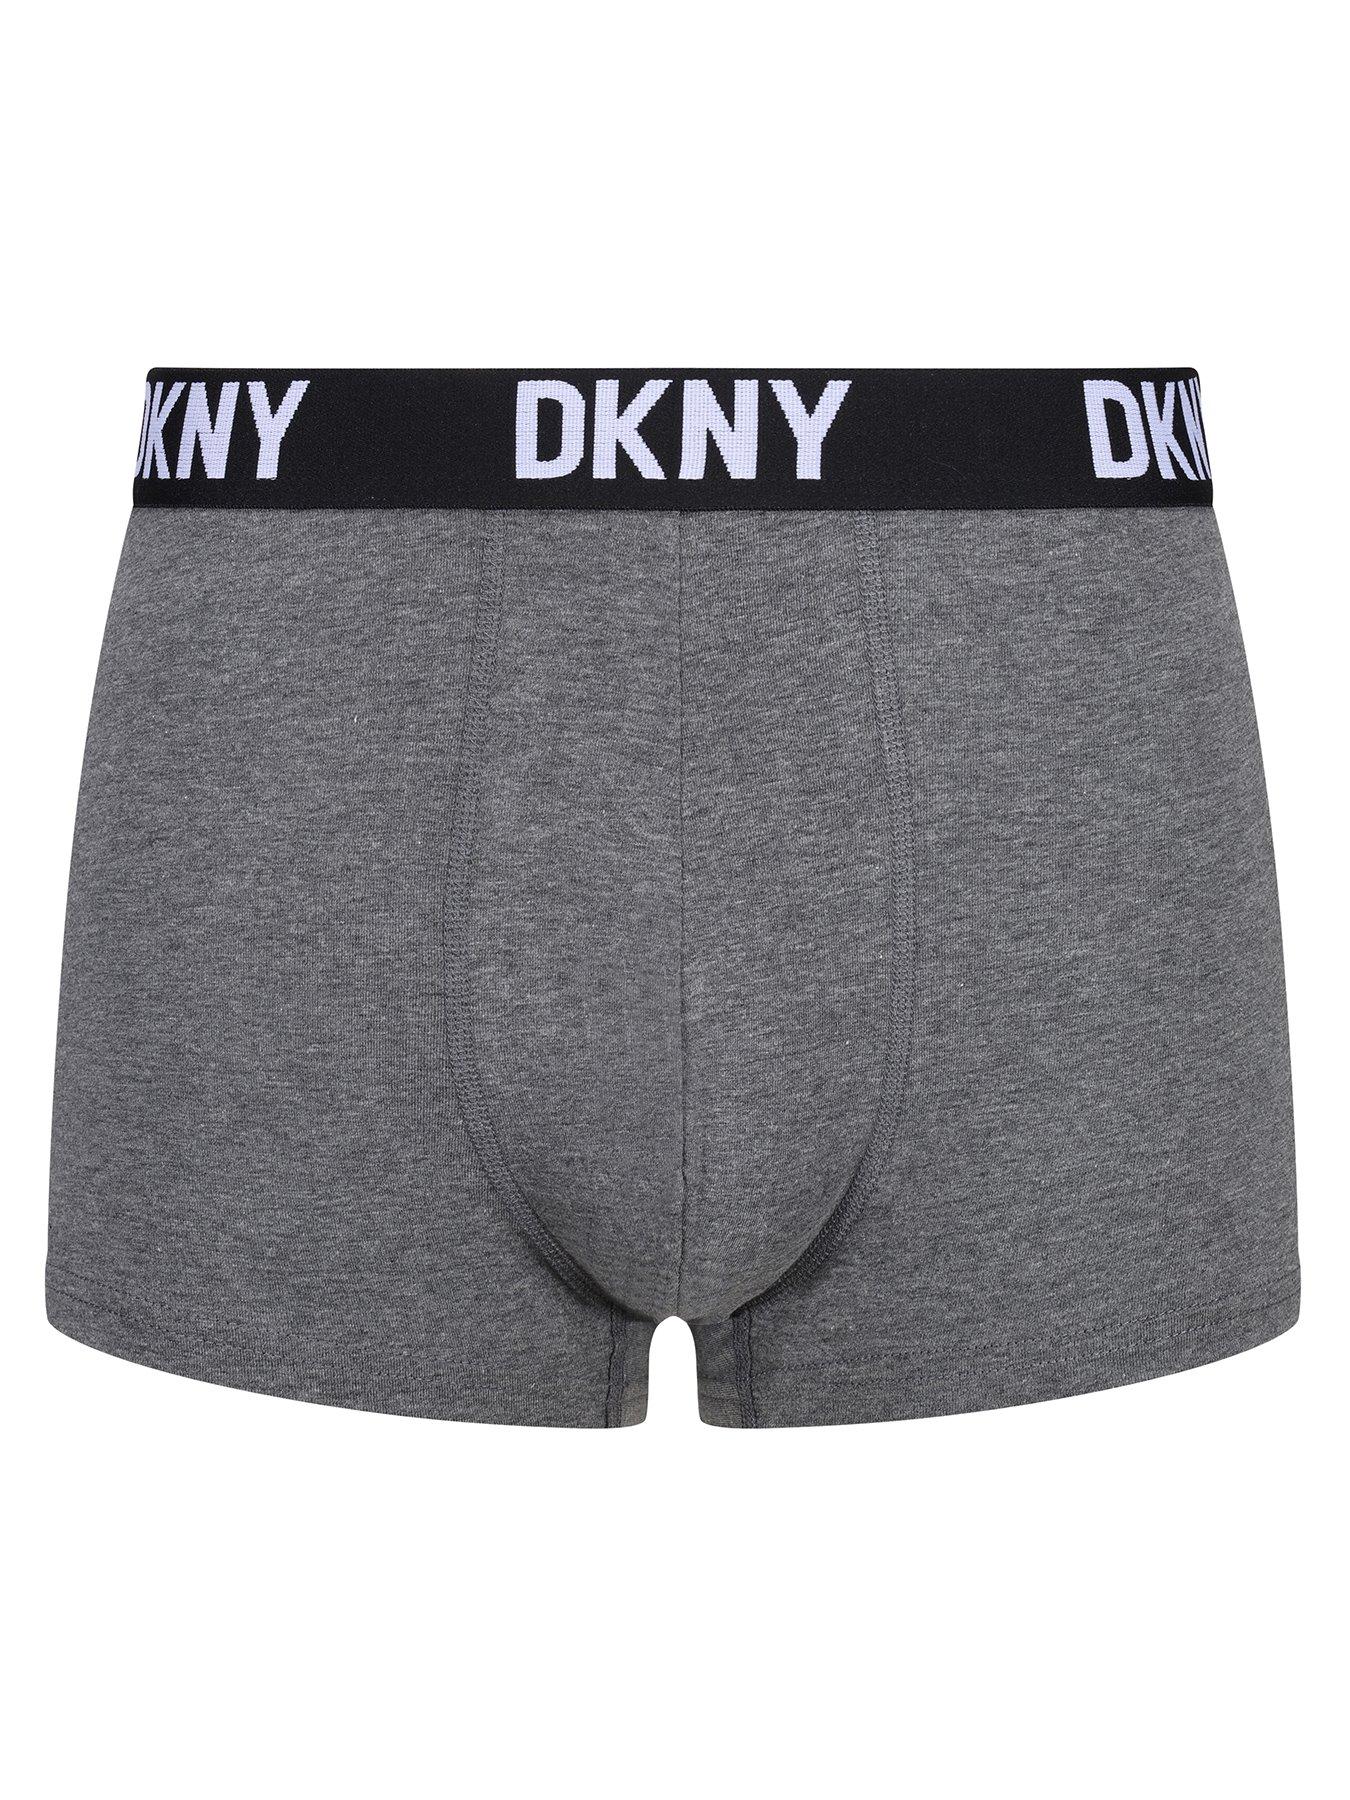 DKNY 5 Pack Portland Trunks - Multi